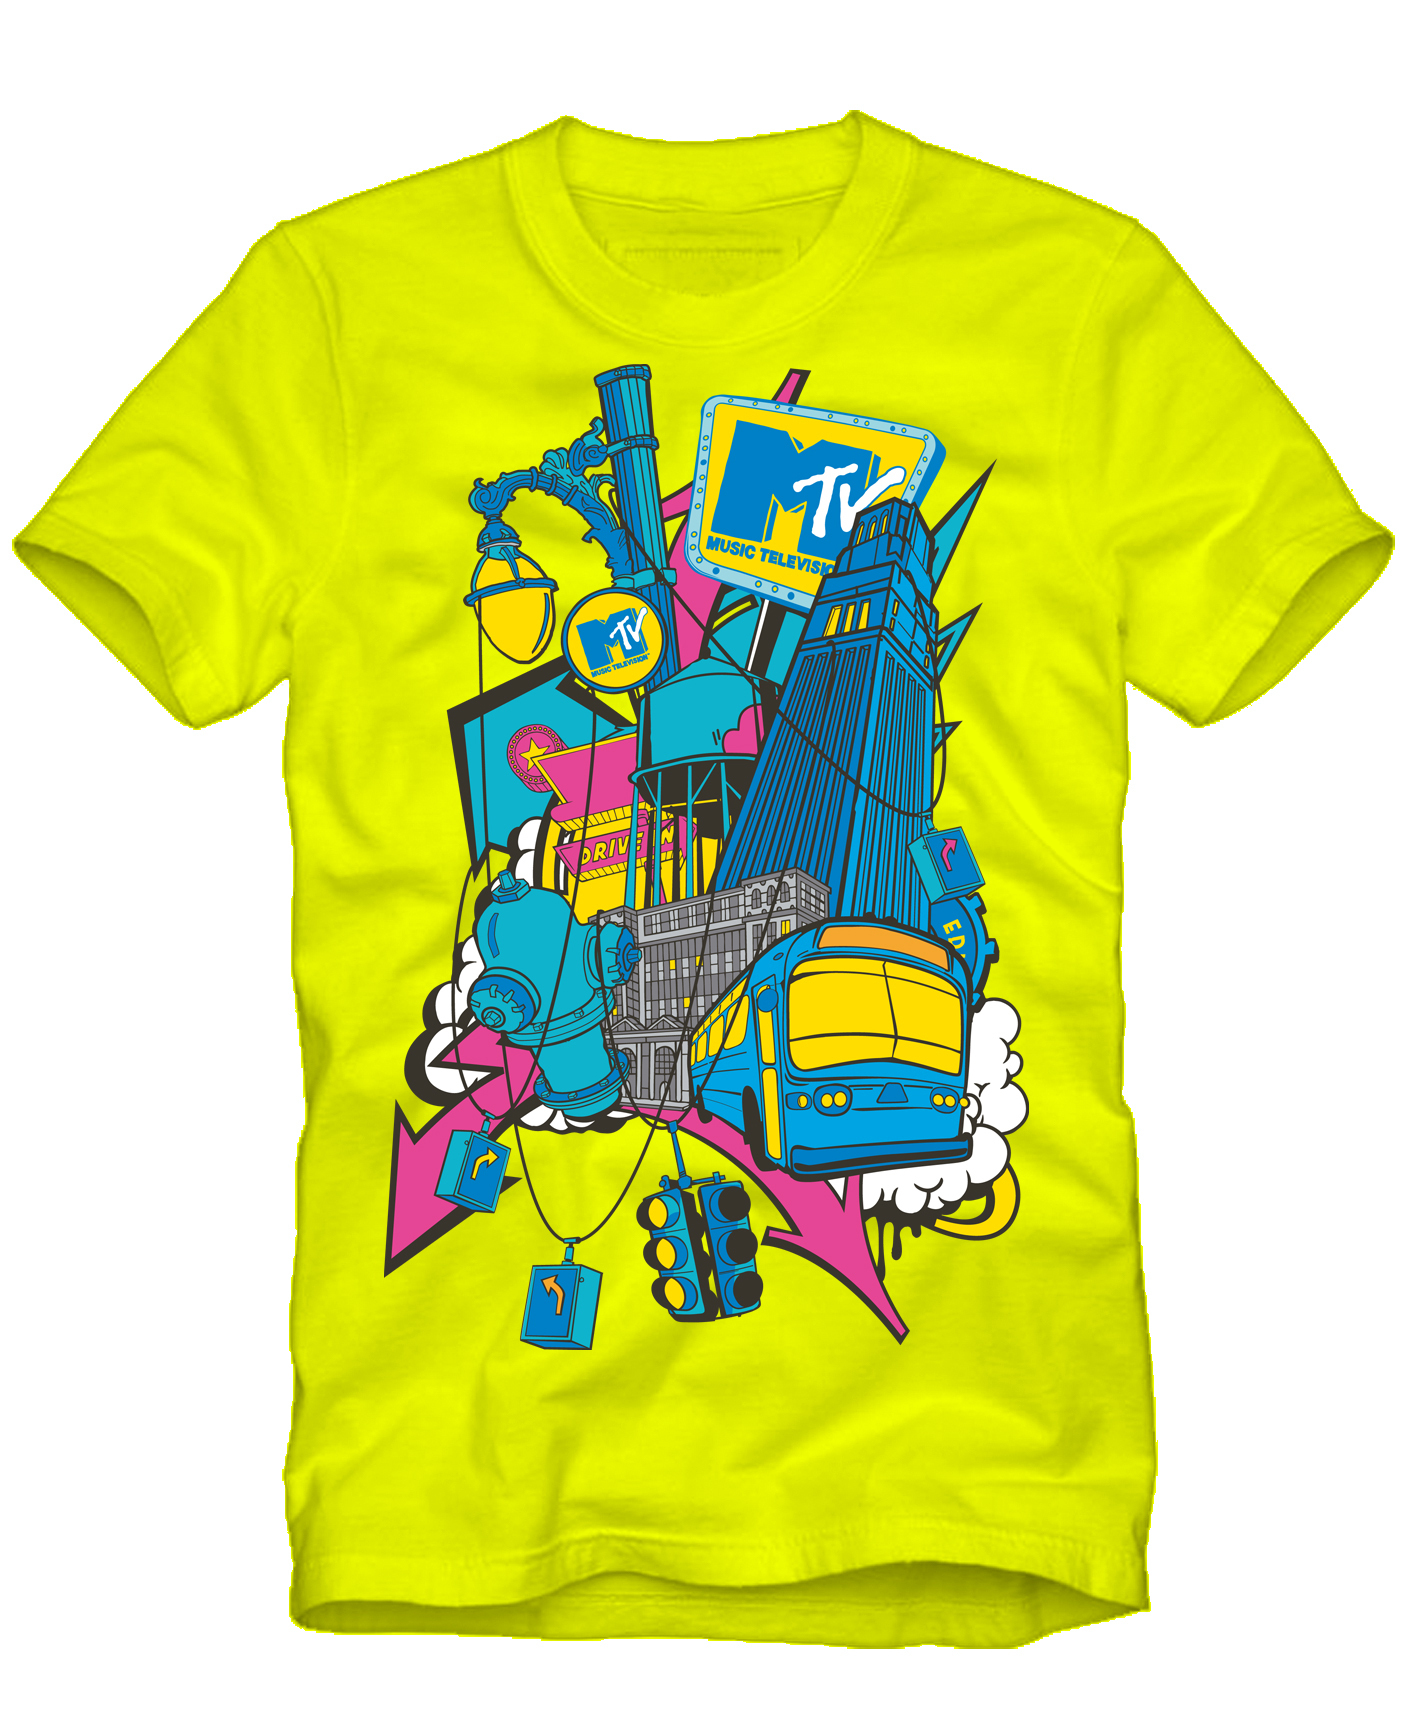 MTV x Zara T-shirt